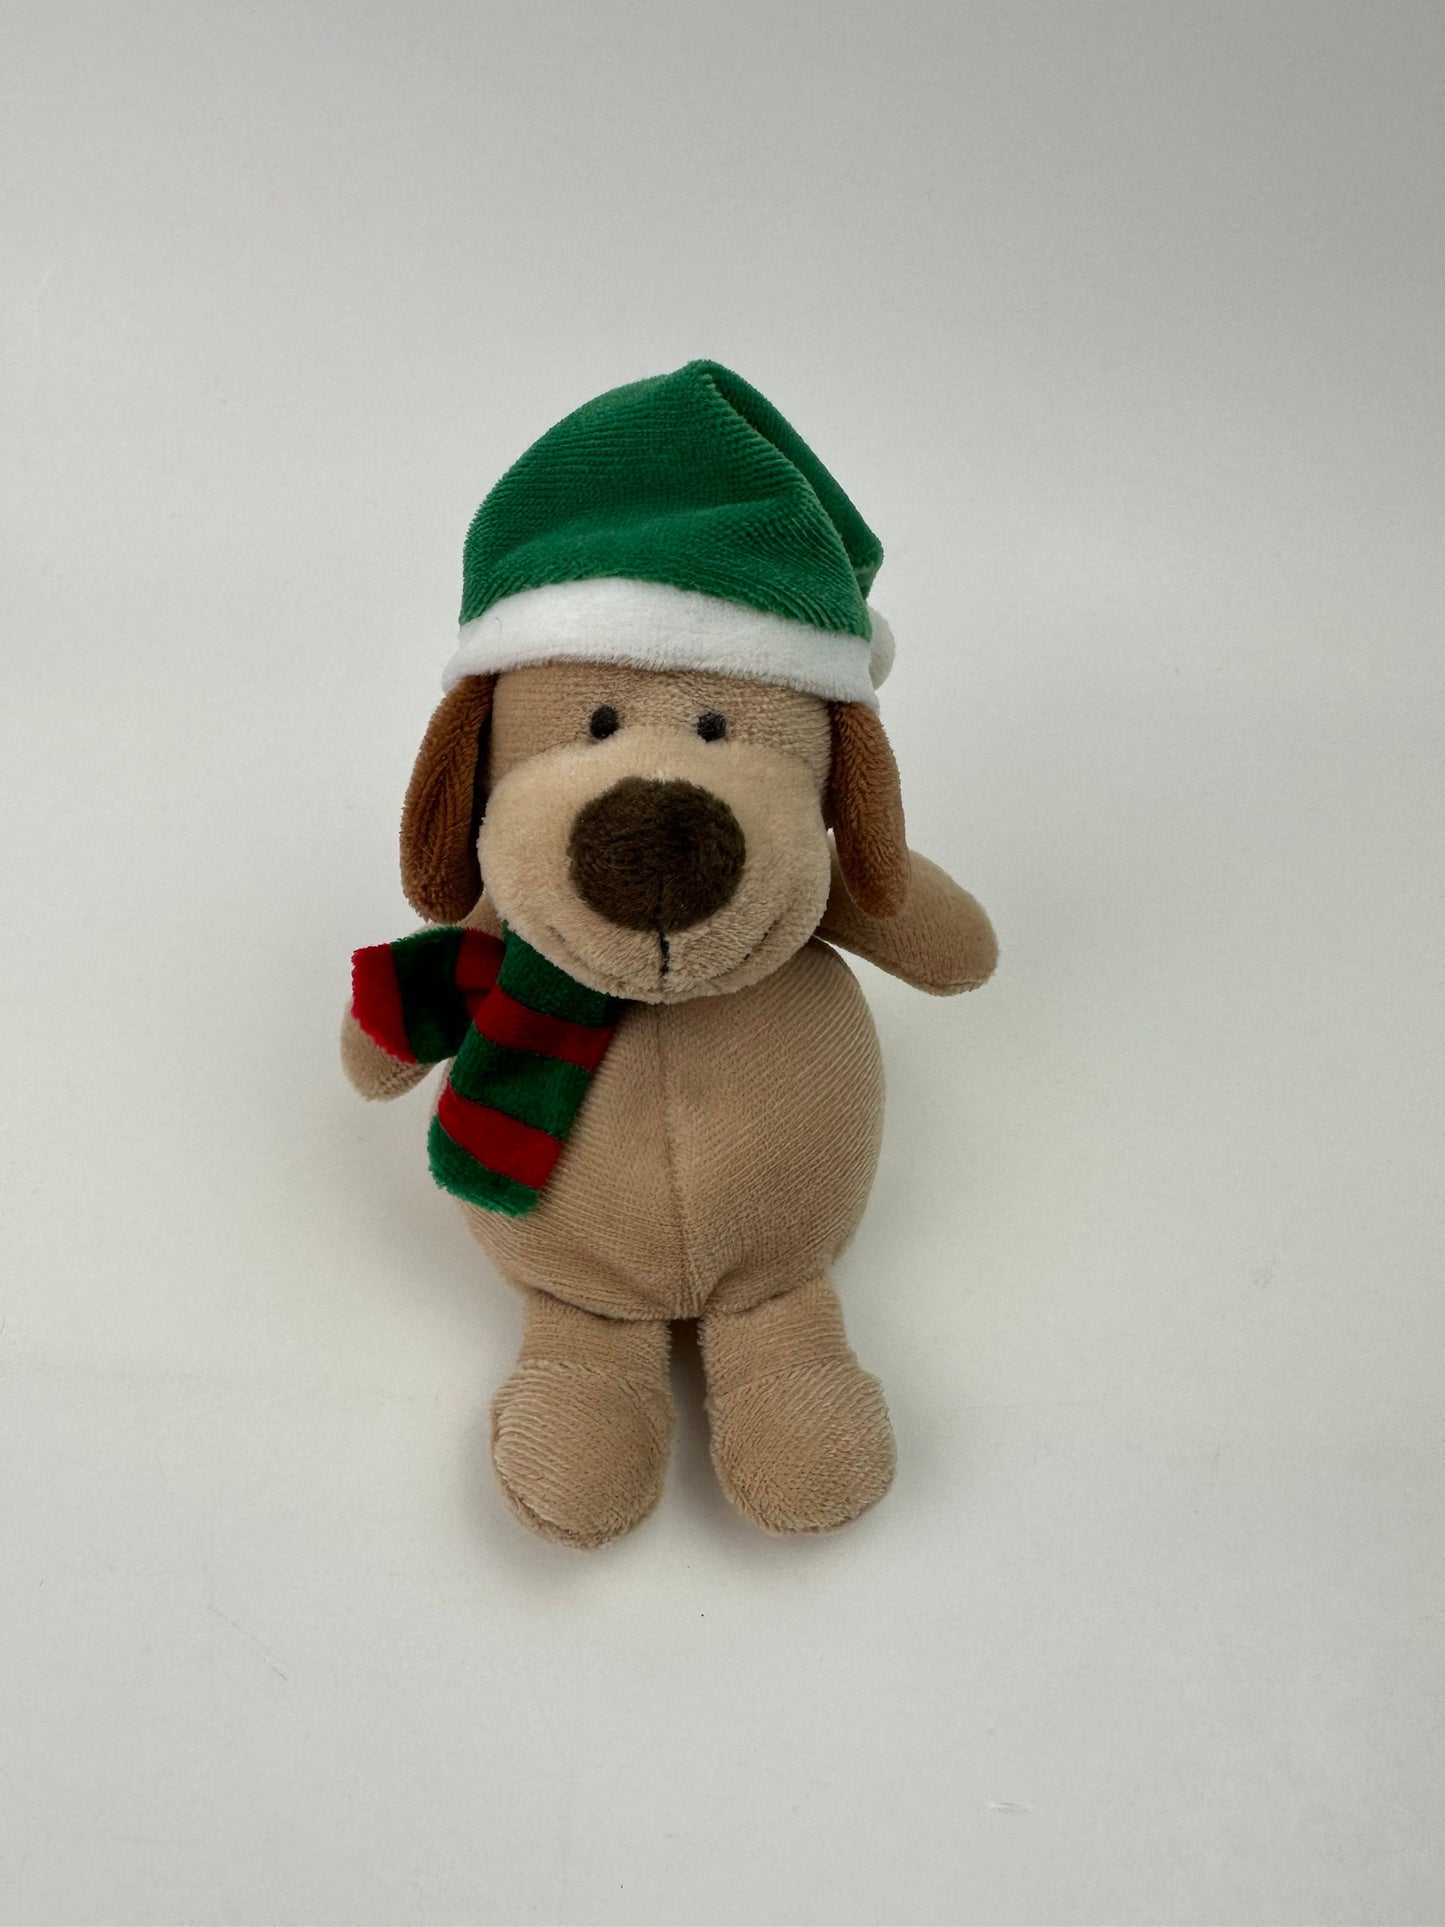 Ty Jingle Beanie Ornament “Slushes” the Holiday Dog - No Hang Tag (4 inch)